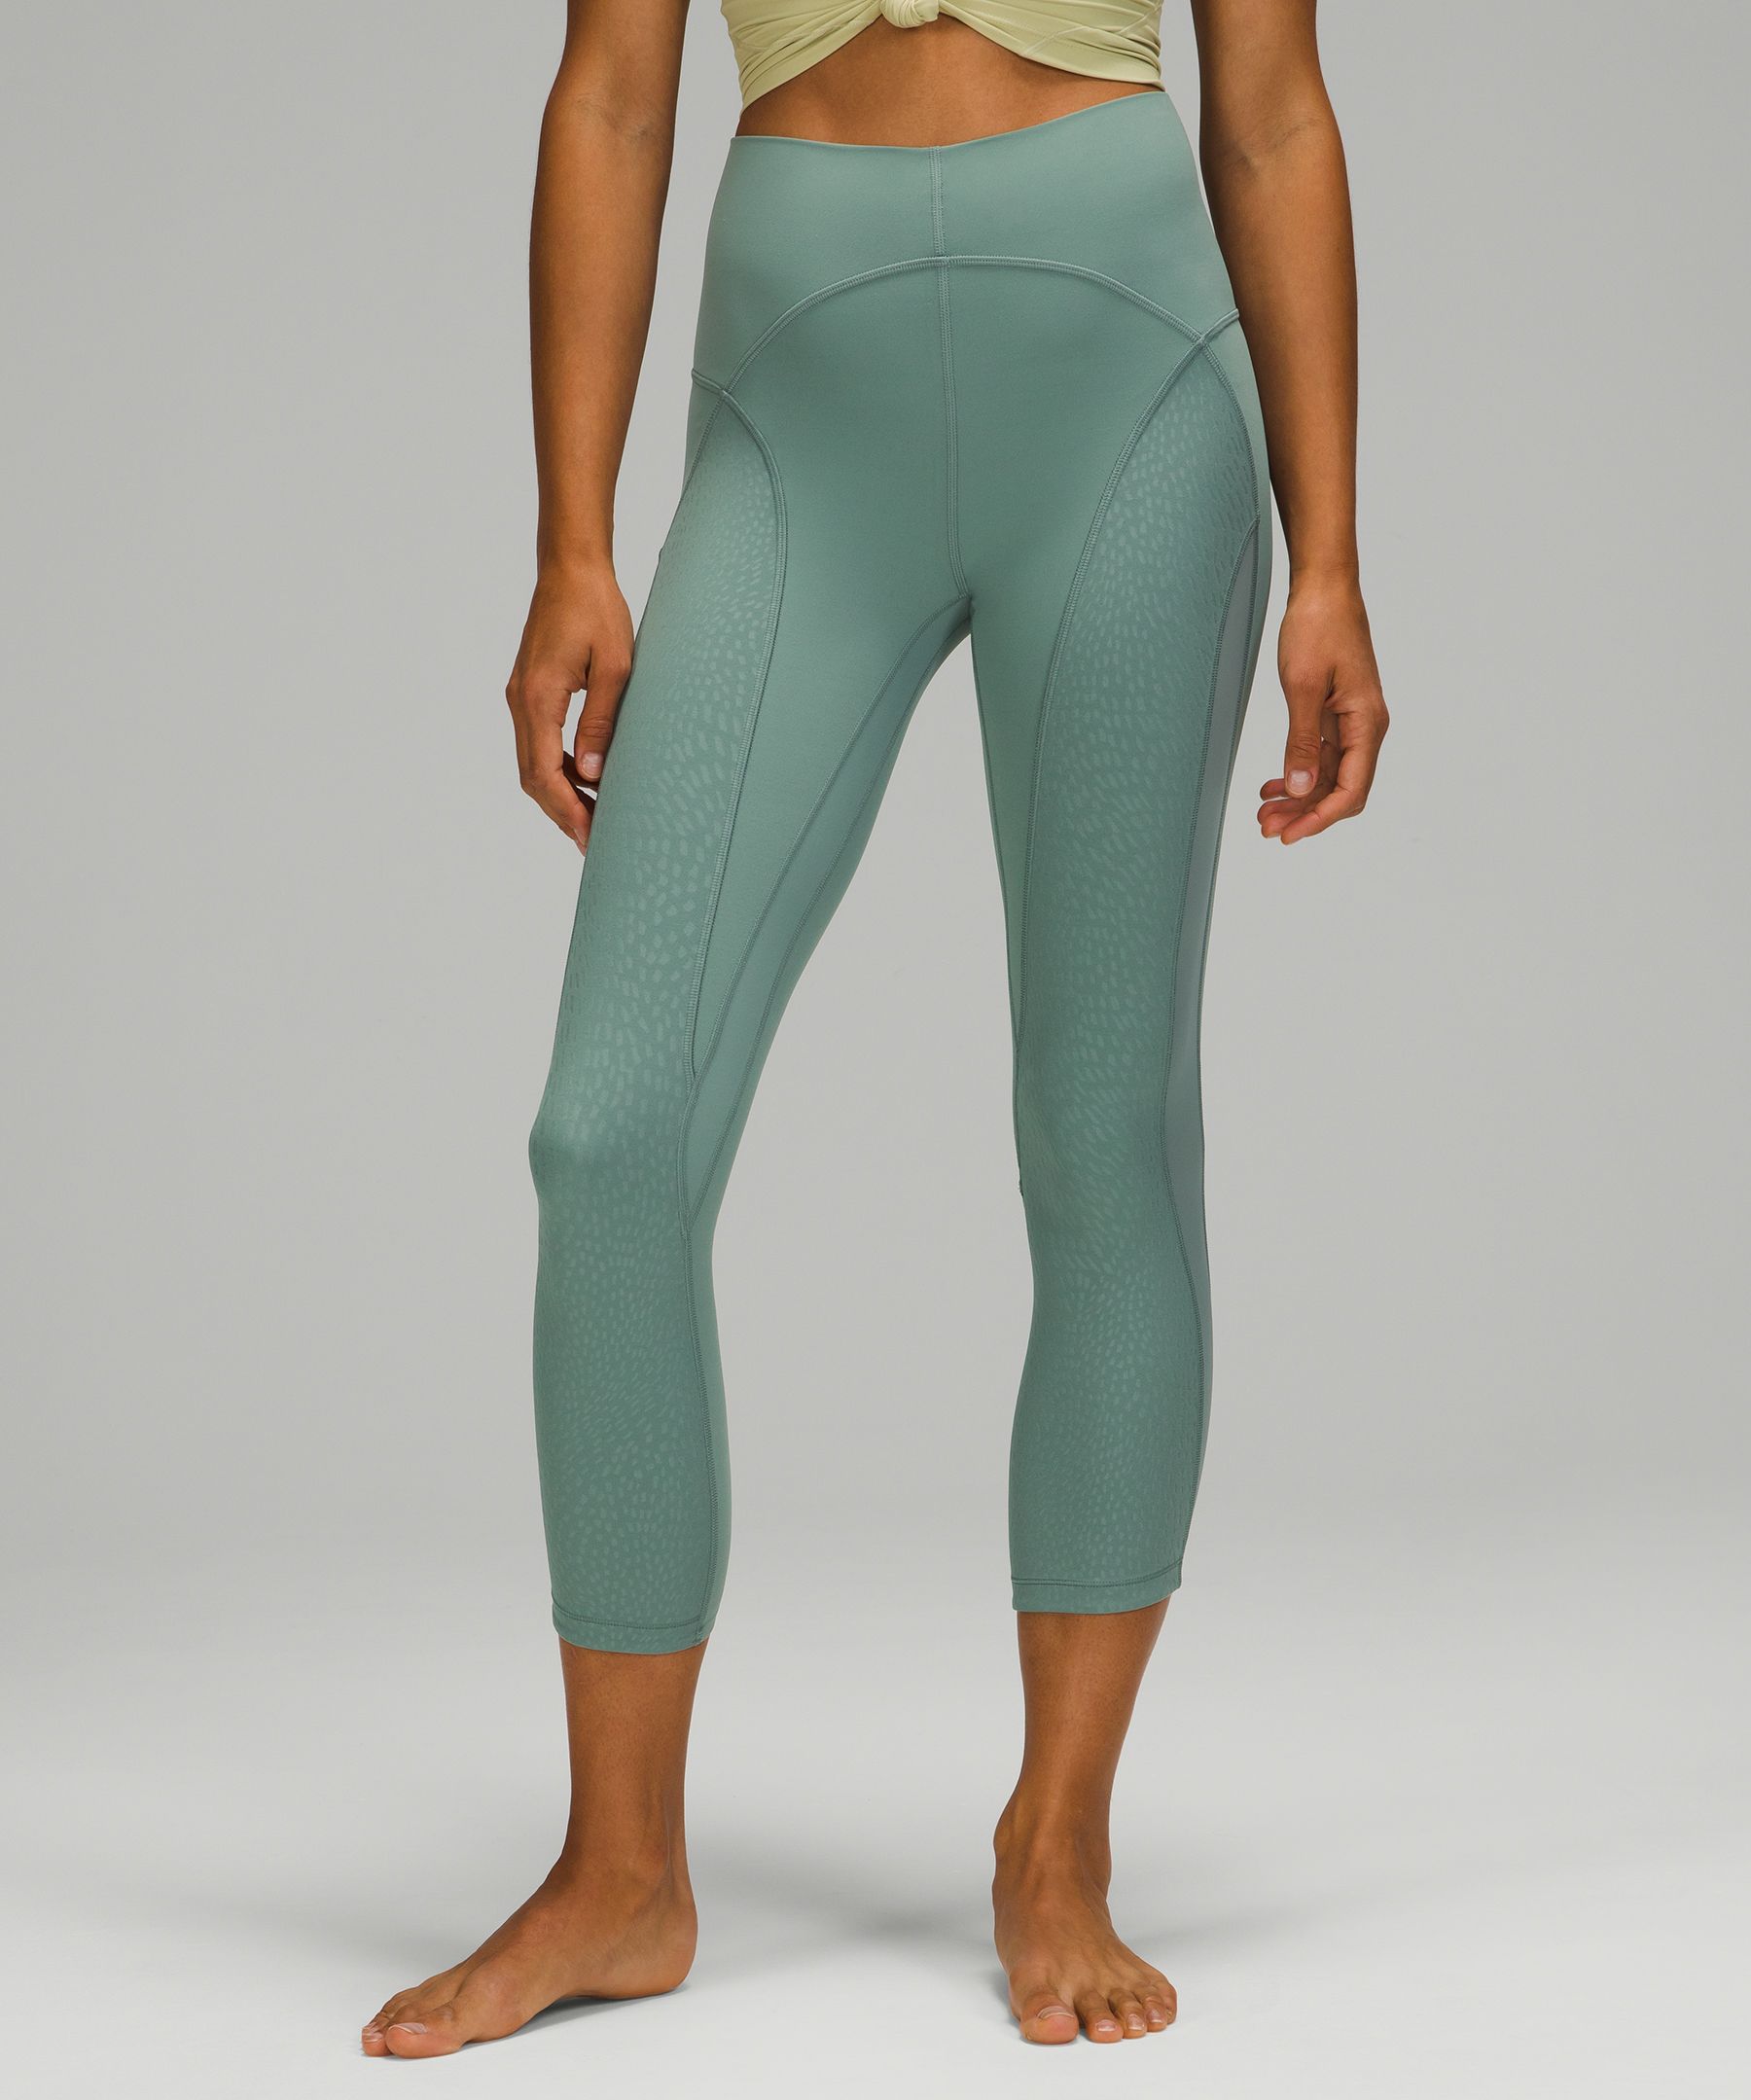 Lululemon new yoga women's pants mesh panels breathable high waist